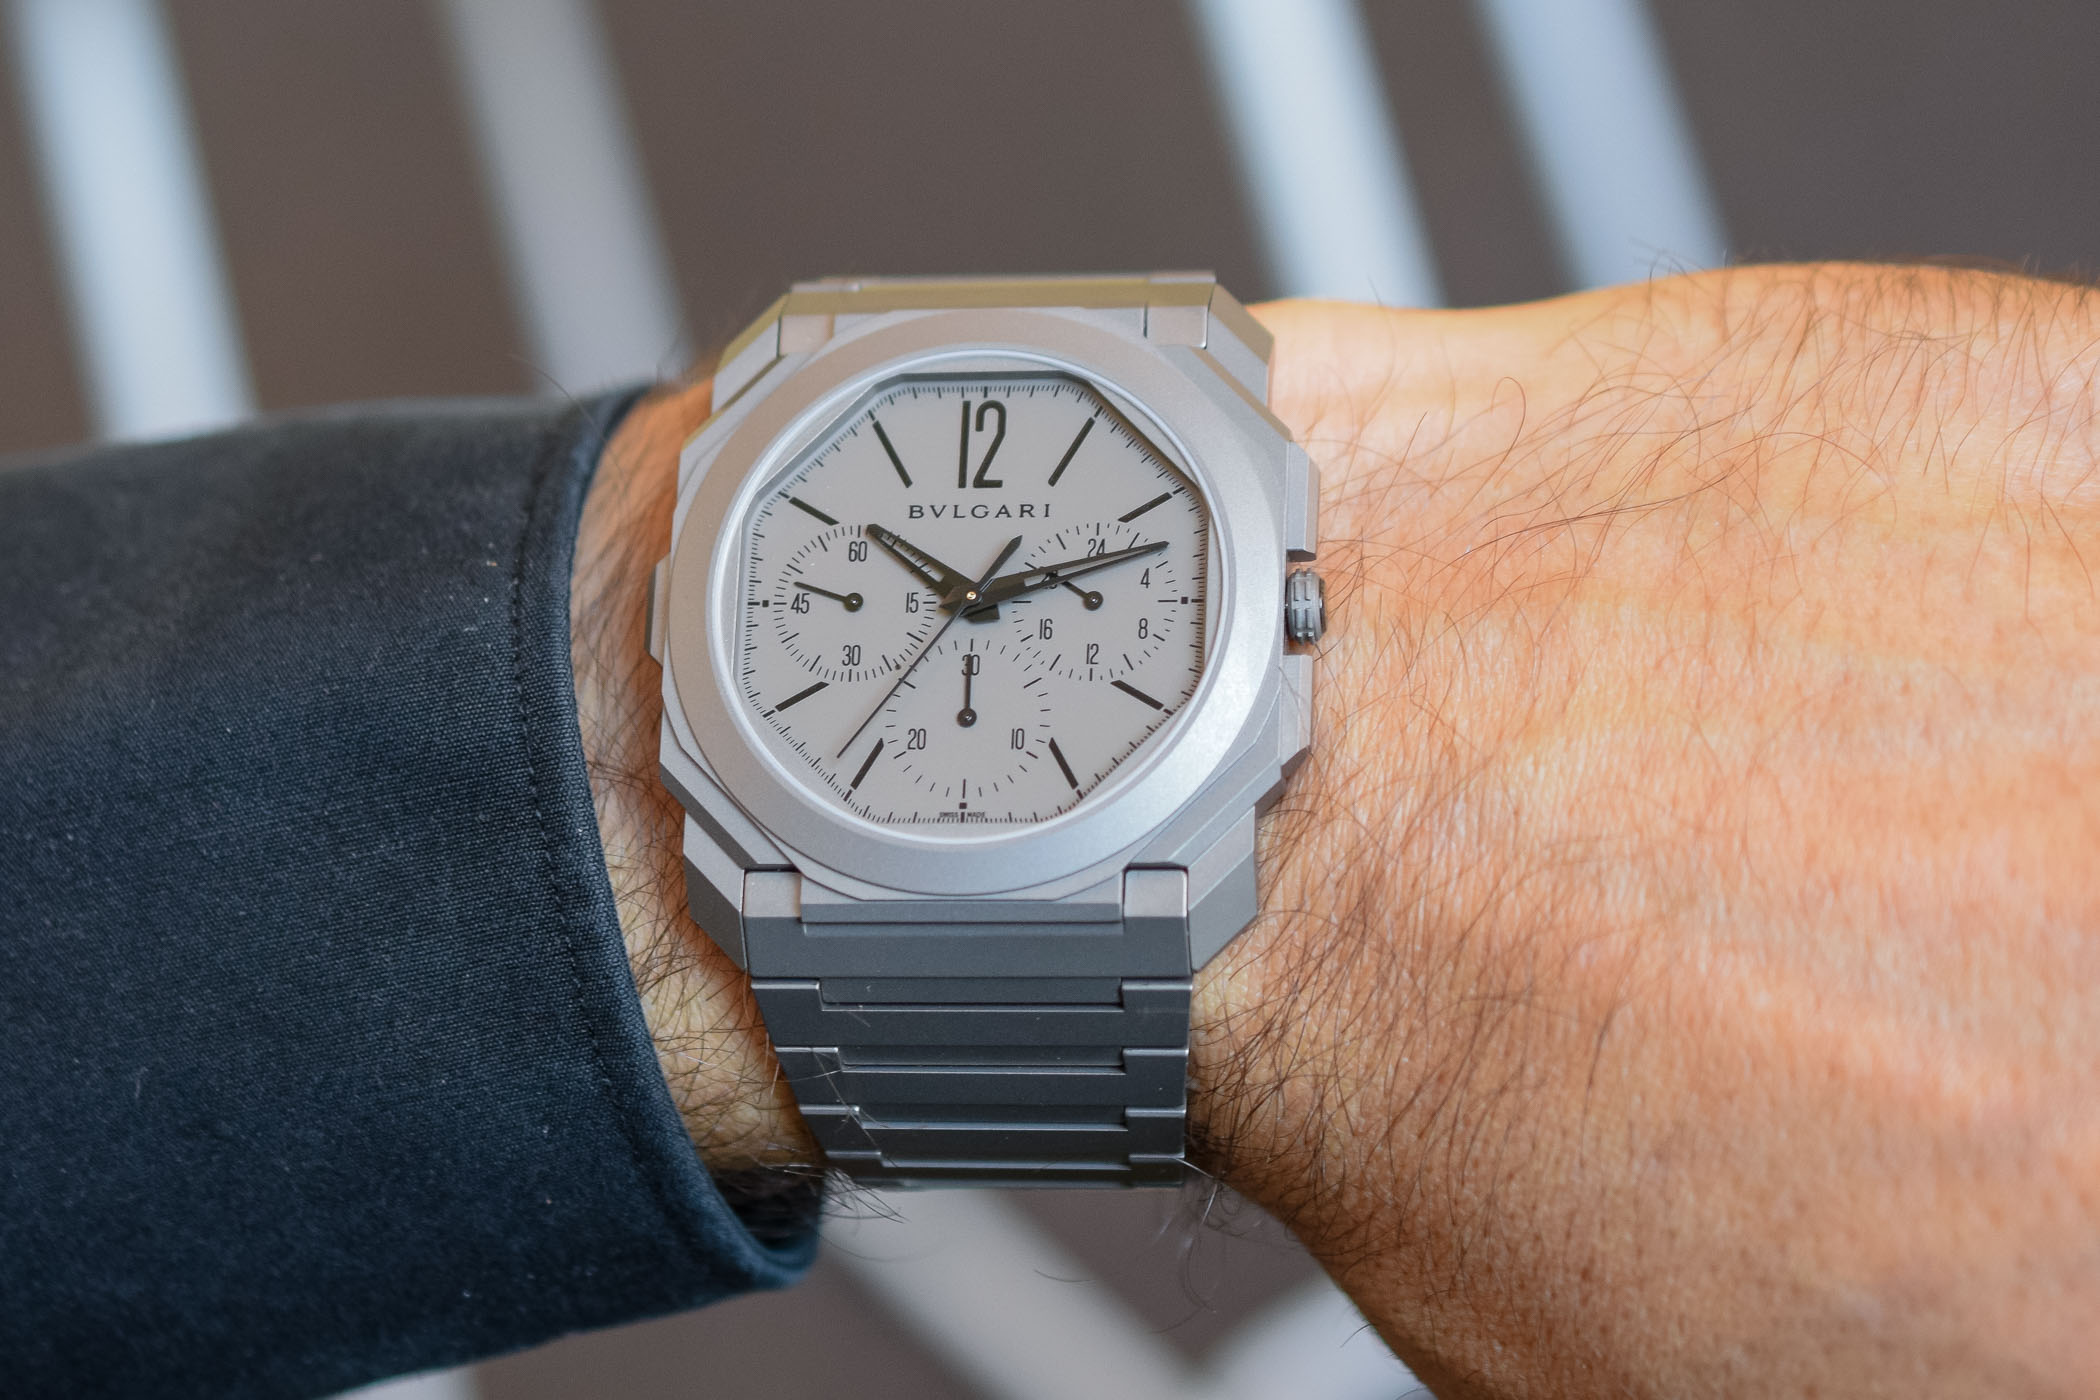 Bulgari Octo Finissimo Chronograph GMT Automatic - Worlds thinnest chronograph - Baselworld 2019